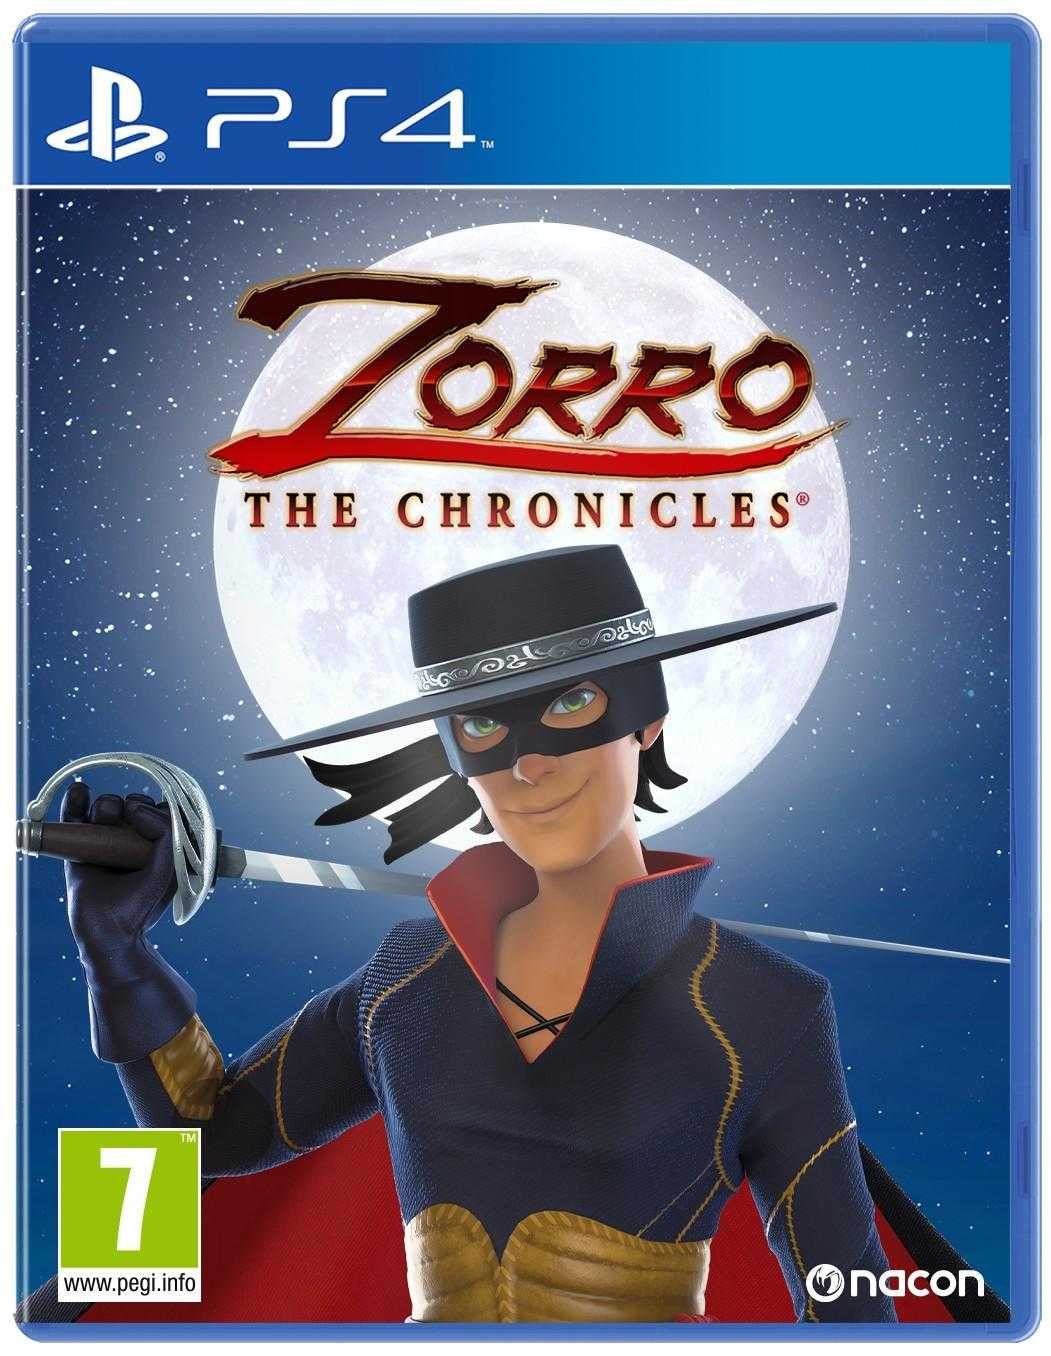 Zorro The Chronicles ps4